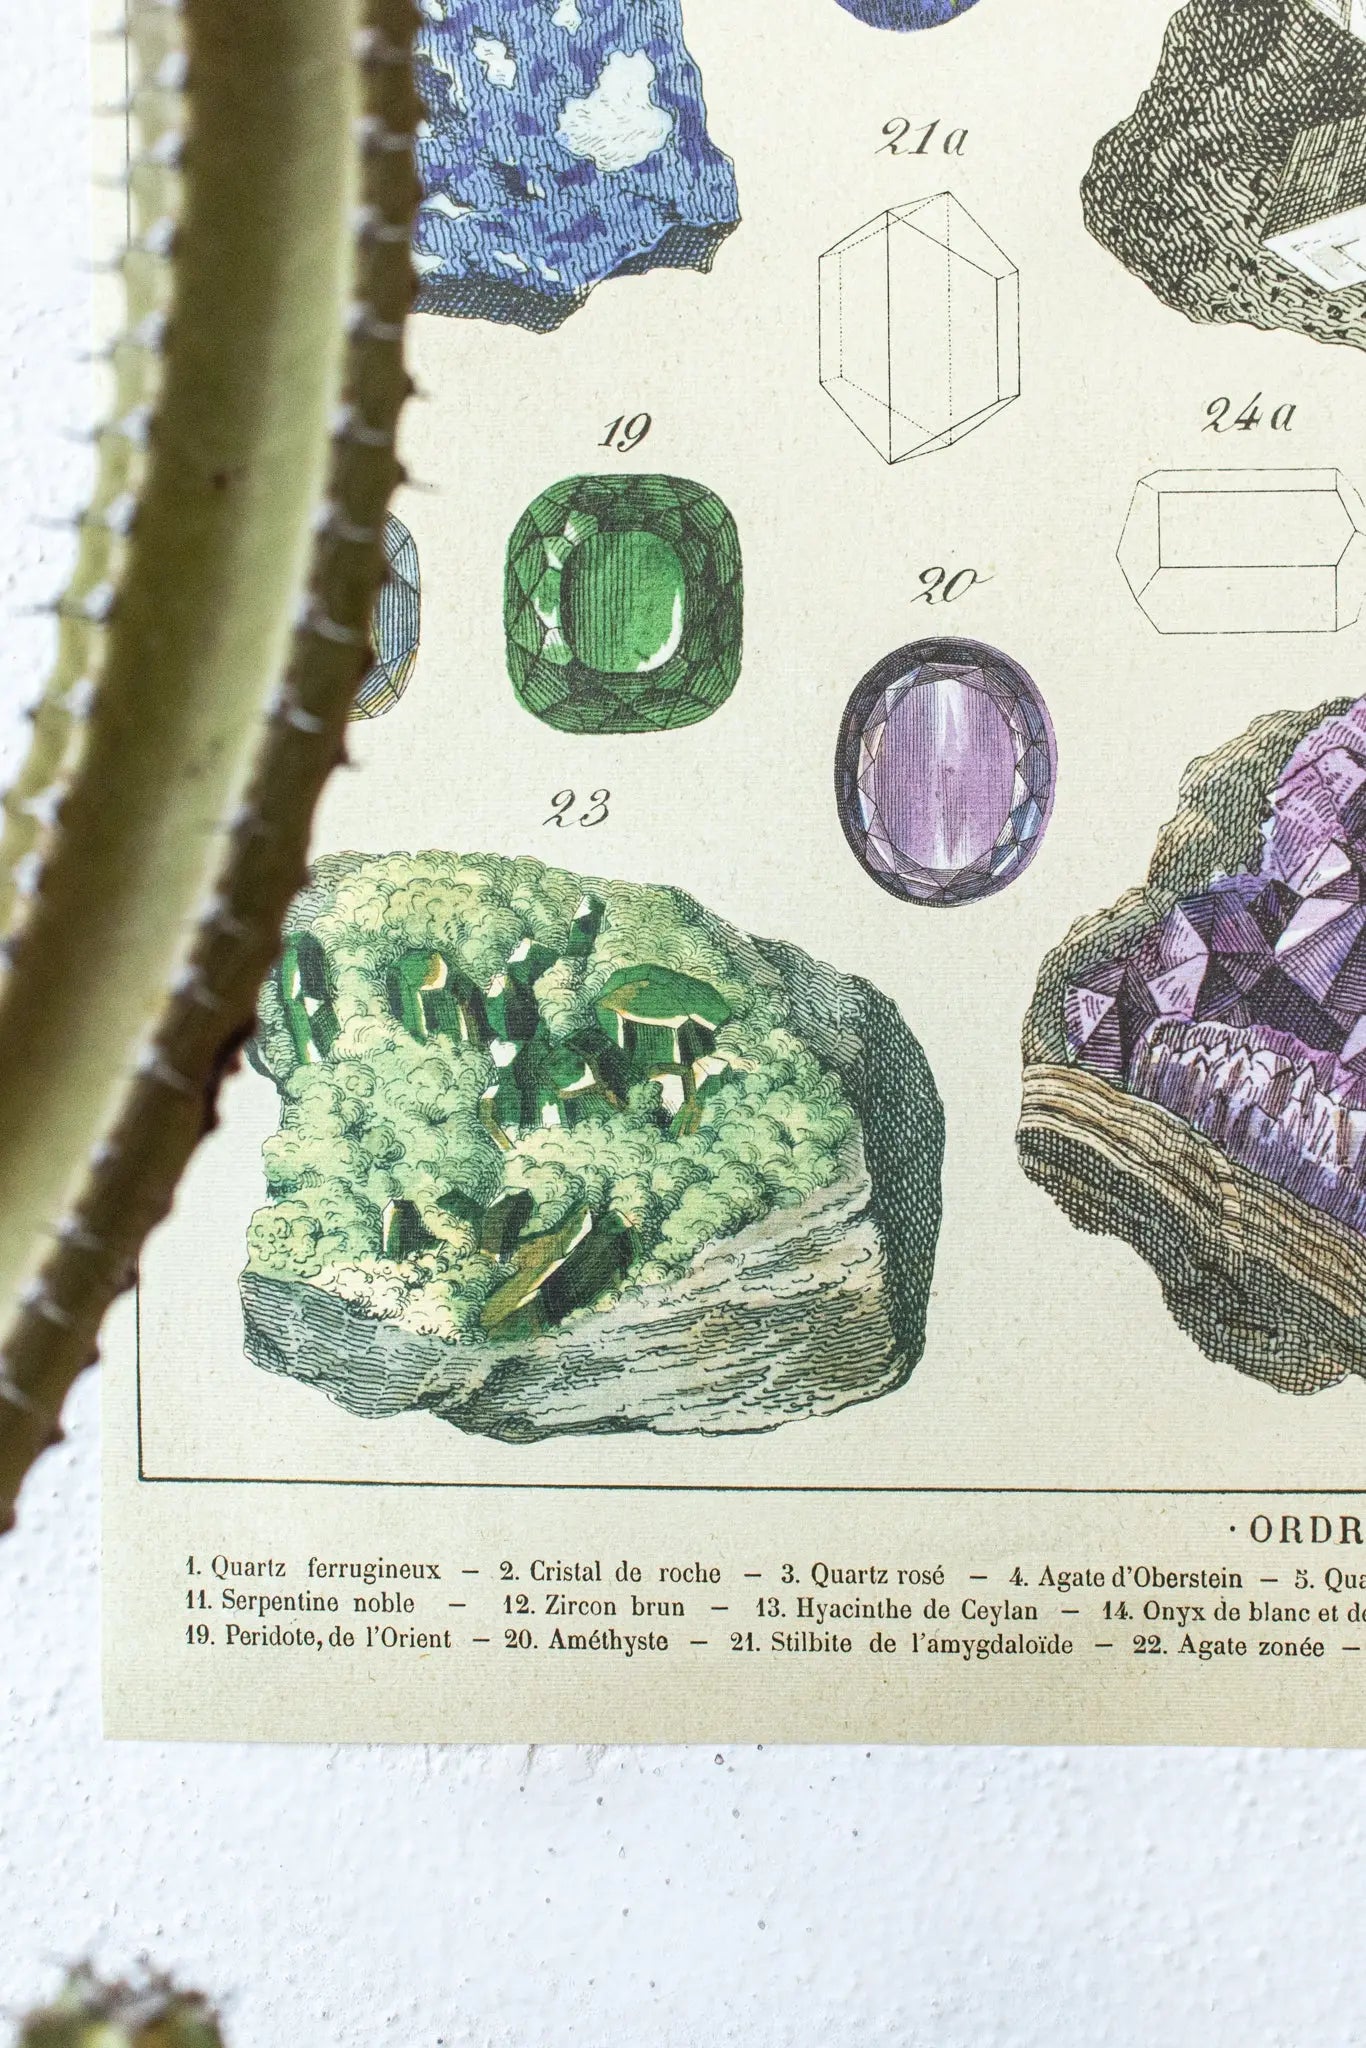 Mineralogy Scientific Chart